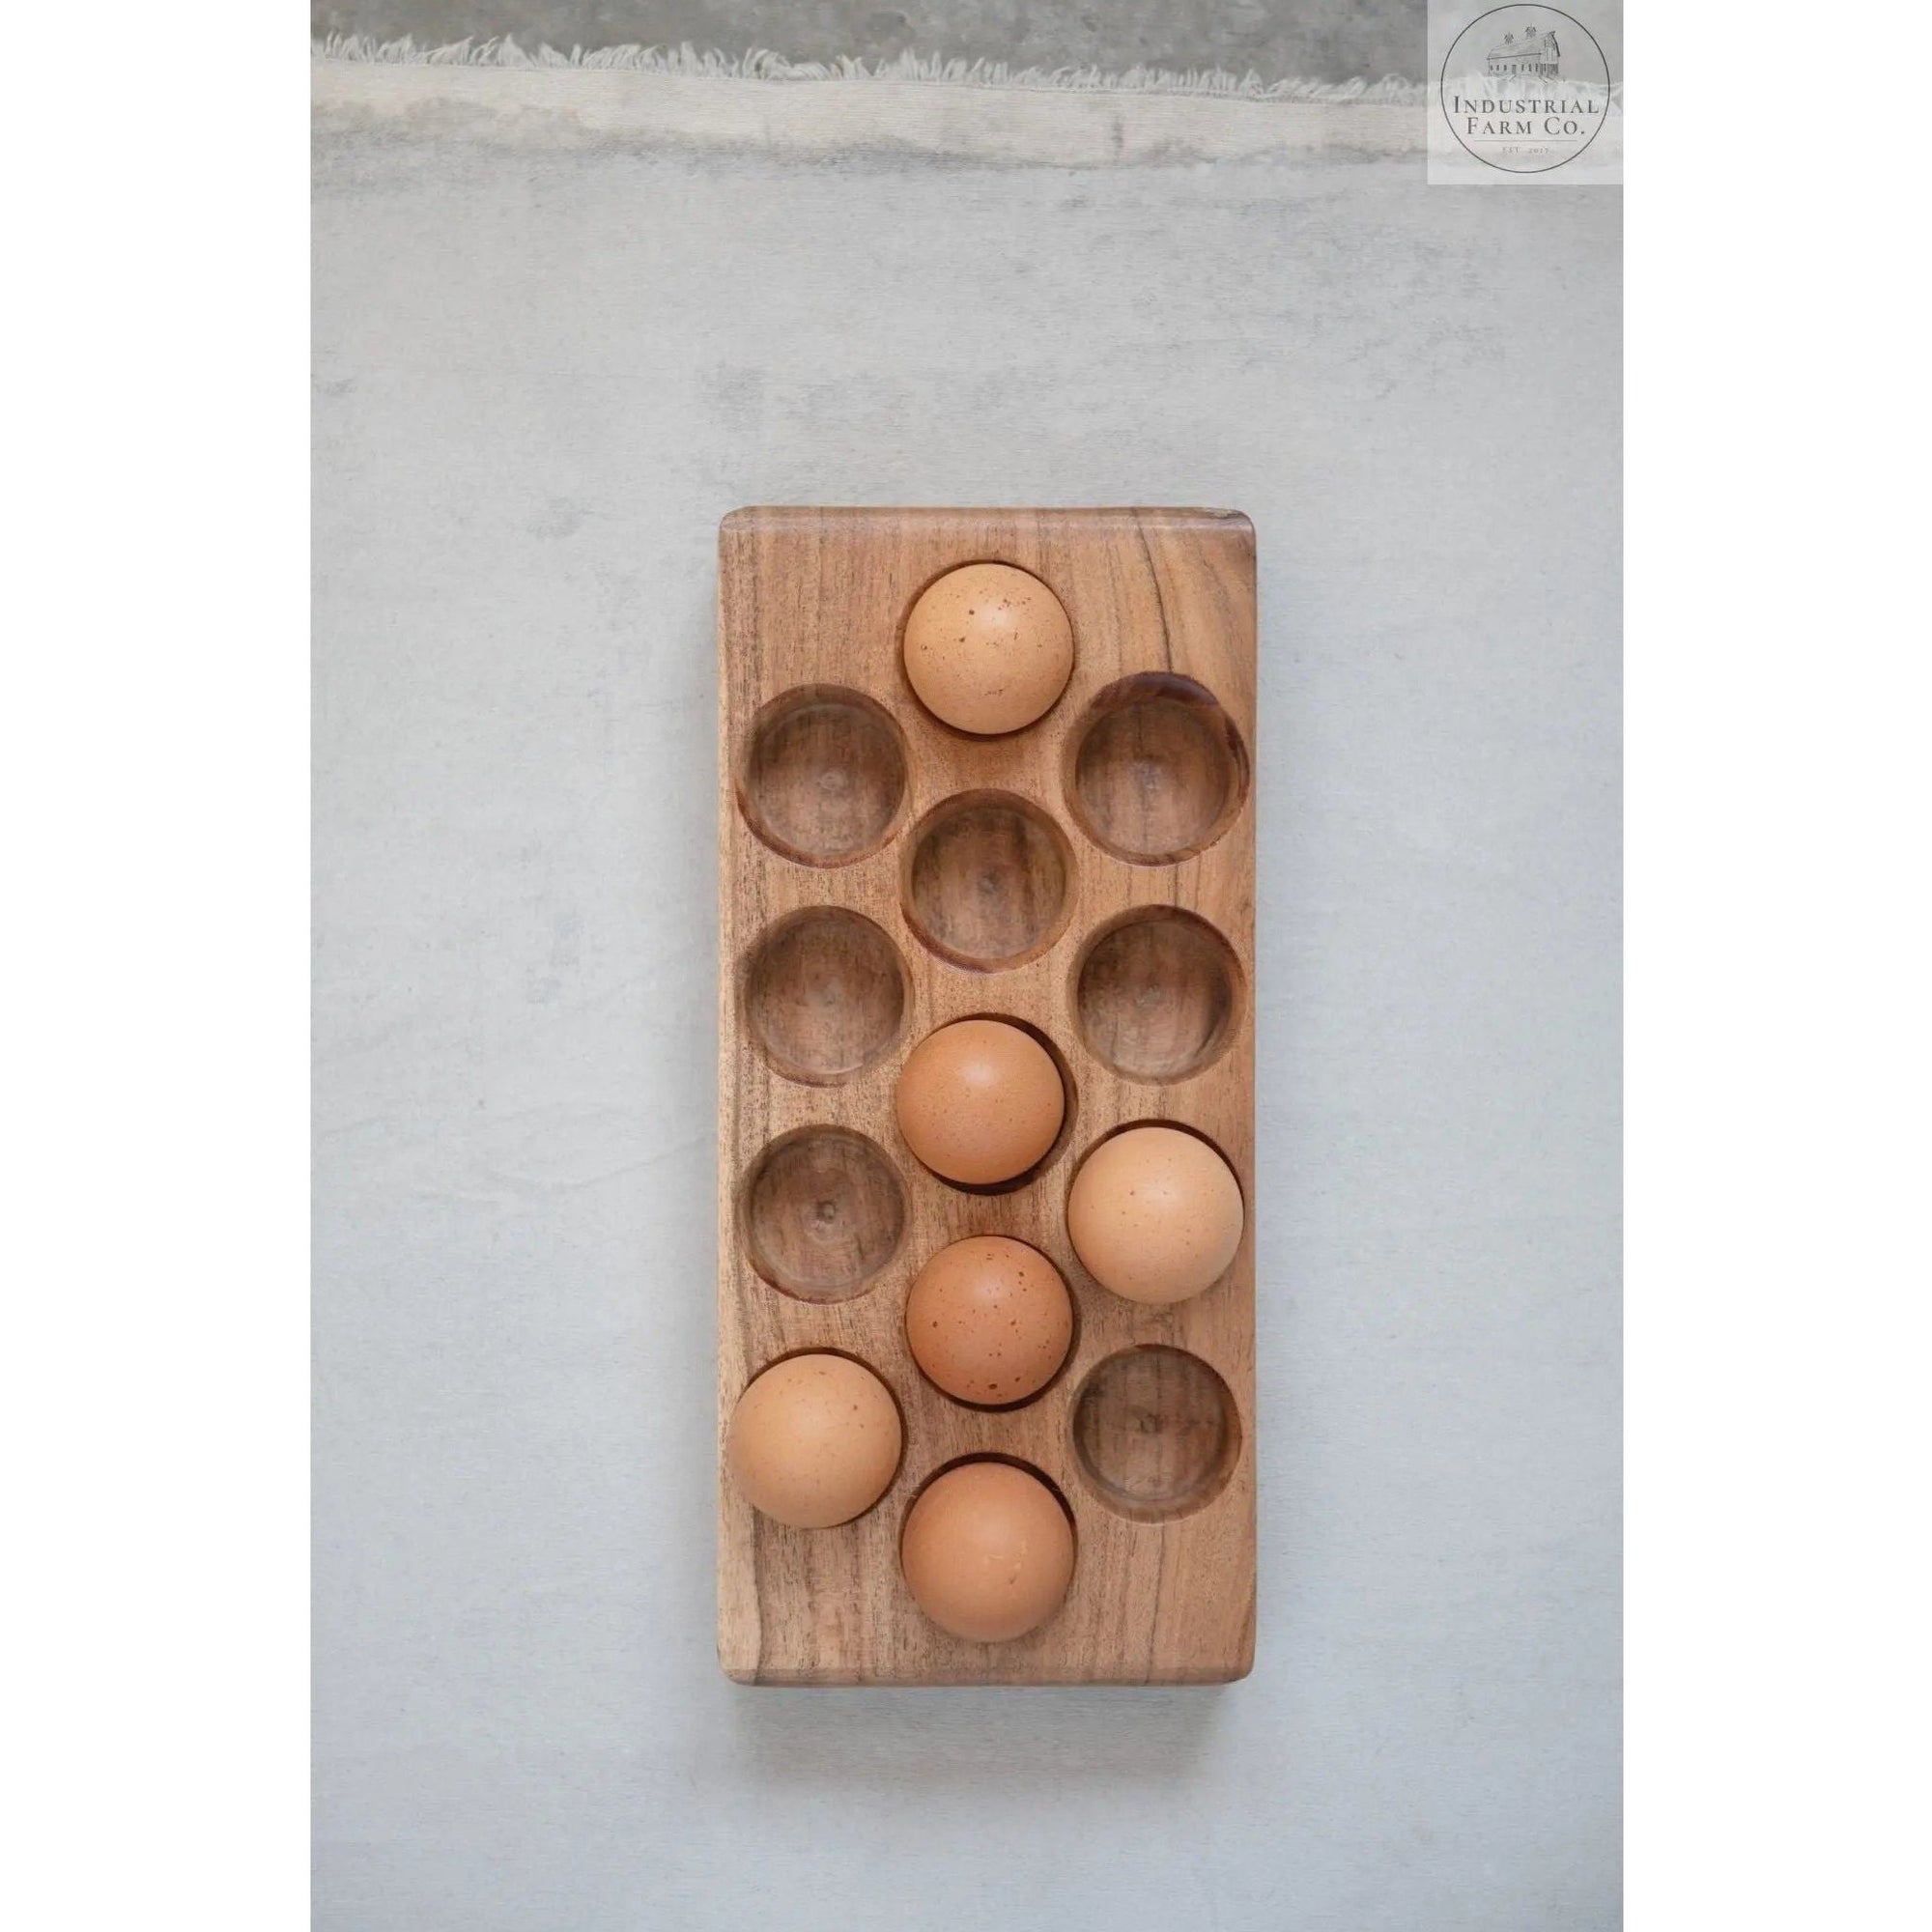 Acacia Wood Egg Tray     | Industrial Farm Co